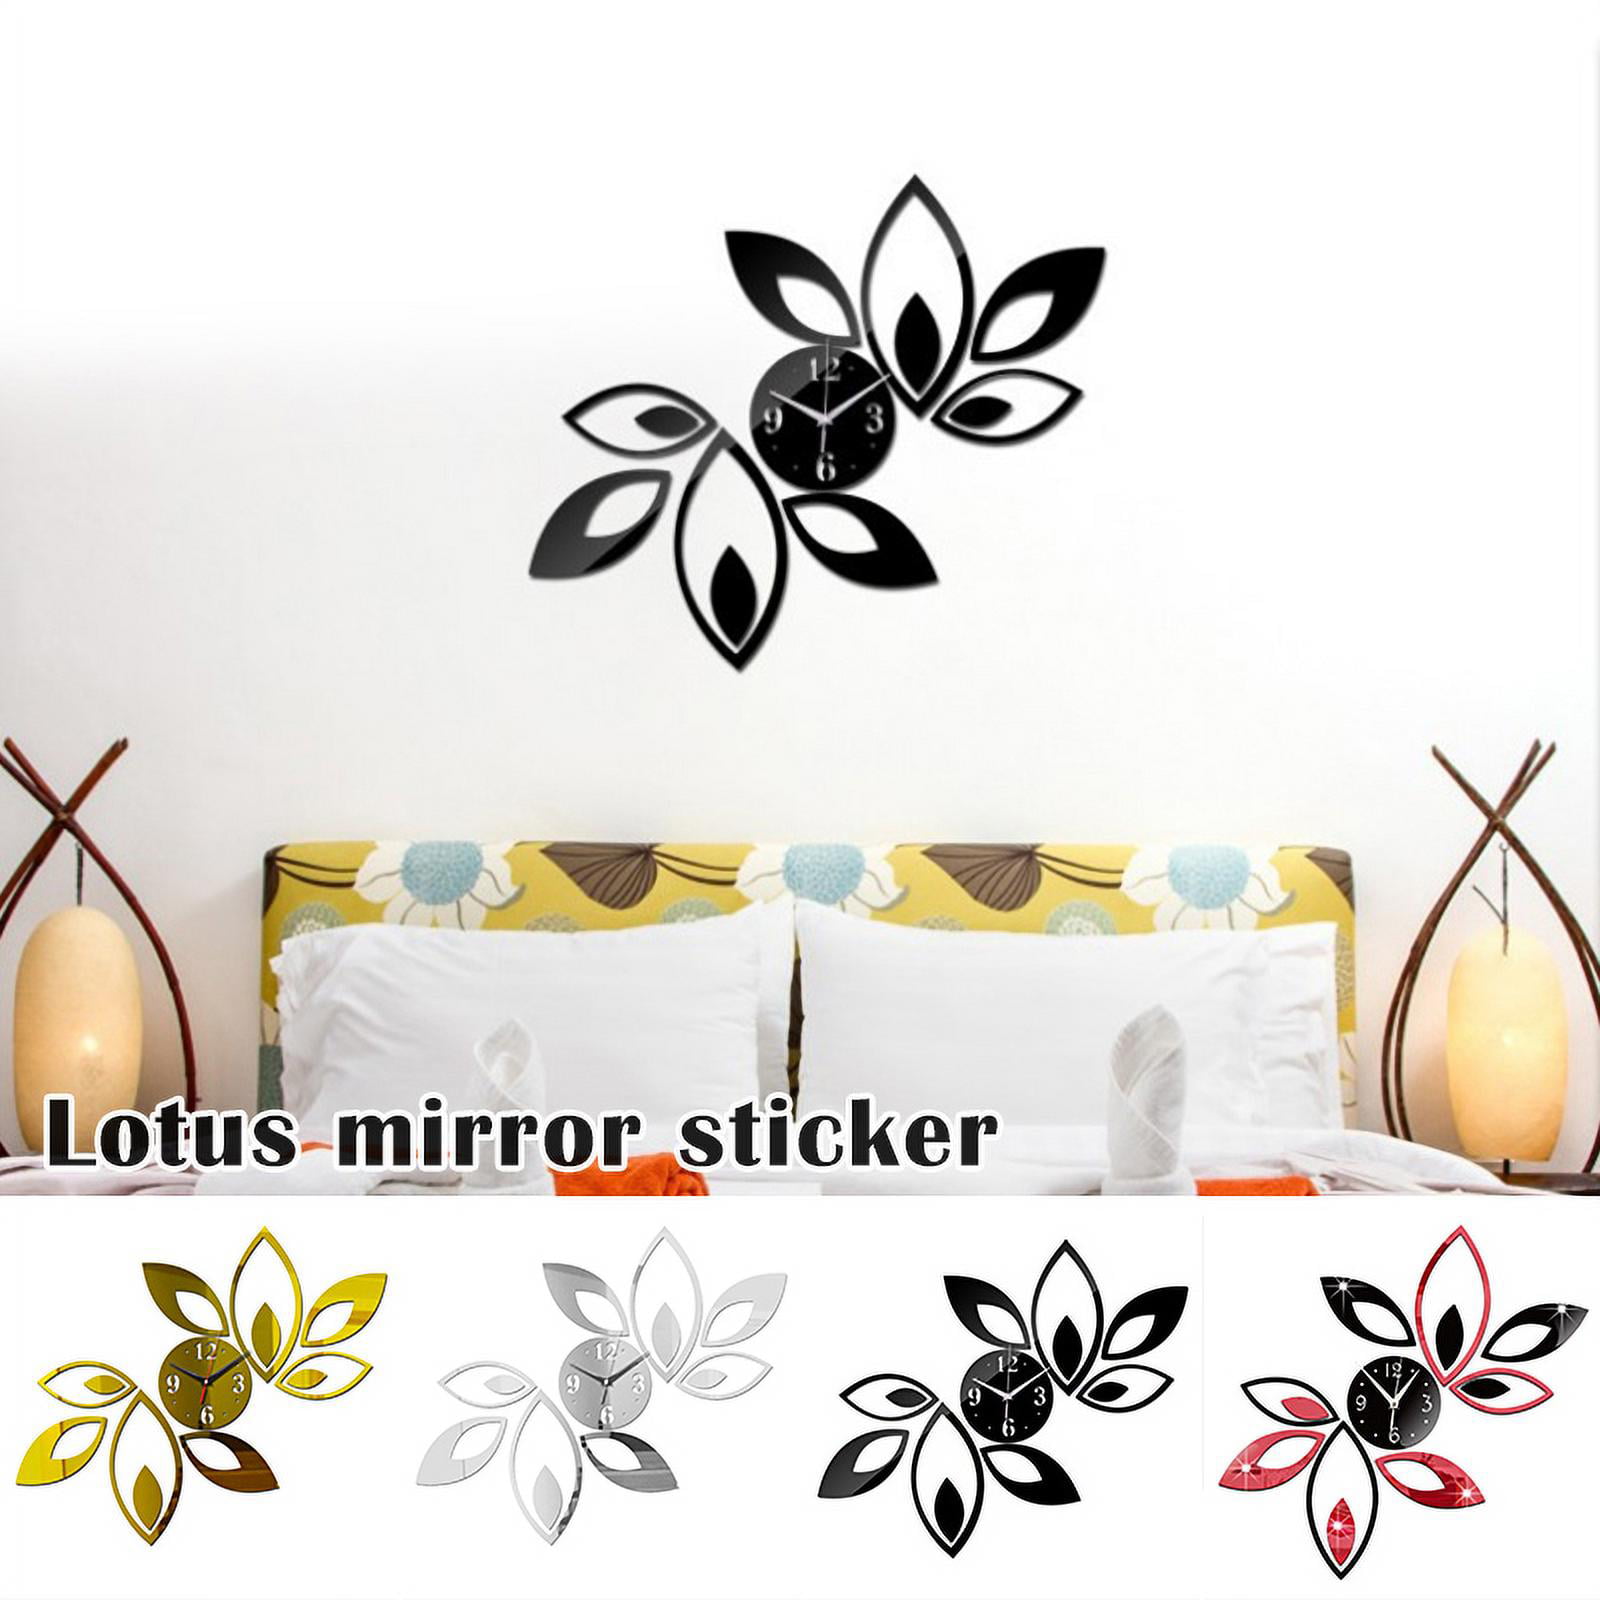 Details about   Hot Sale 3D Modern Mirror Wall Clock Lotus DIY Art Acrylic Wall Sticker Decal Ho 